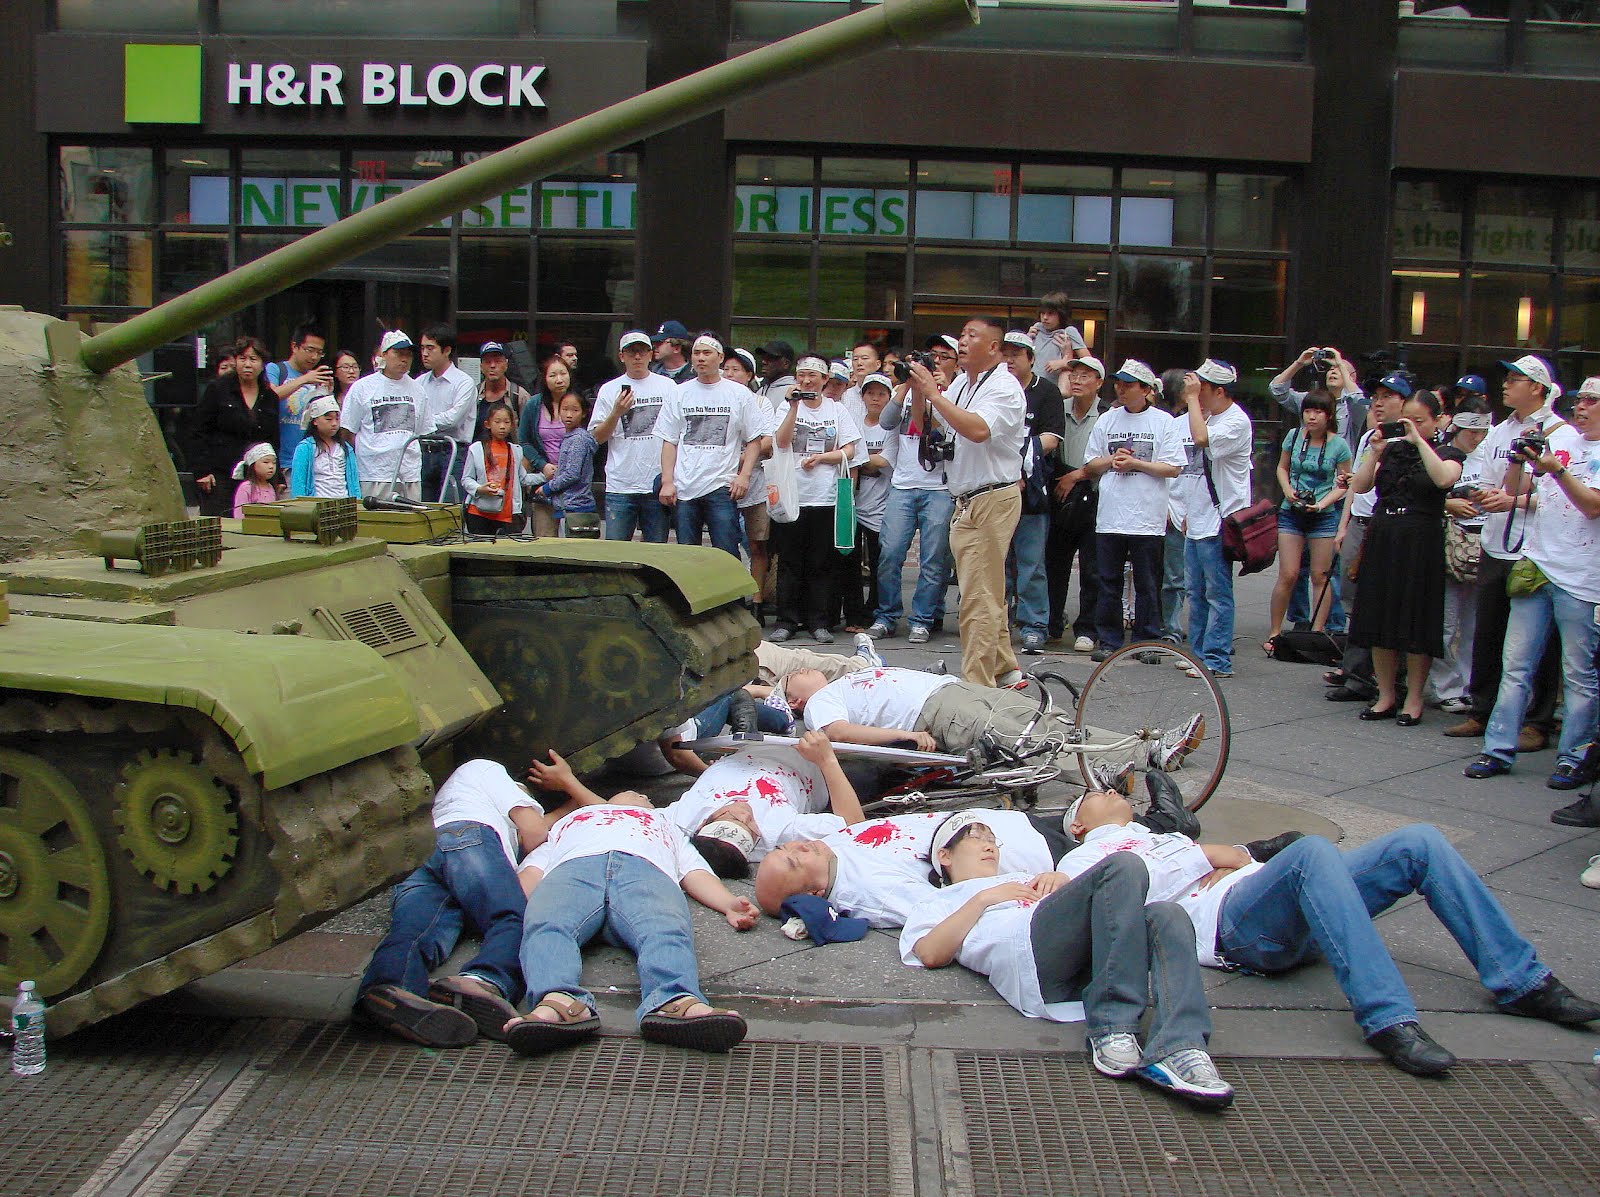 Image result for Tiananmen massacre  blogspot.com